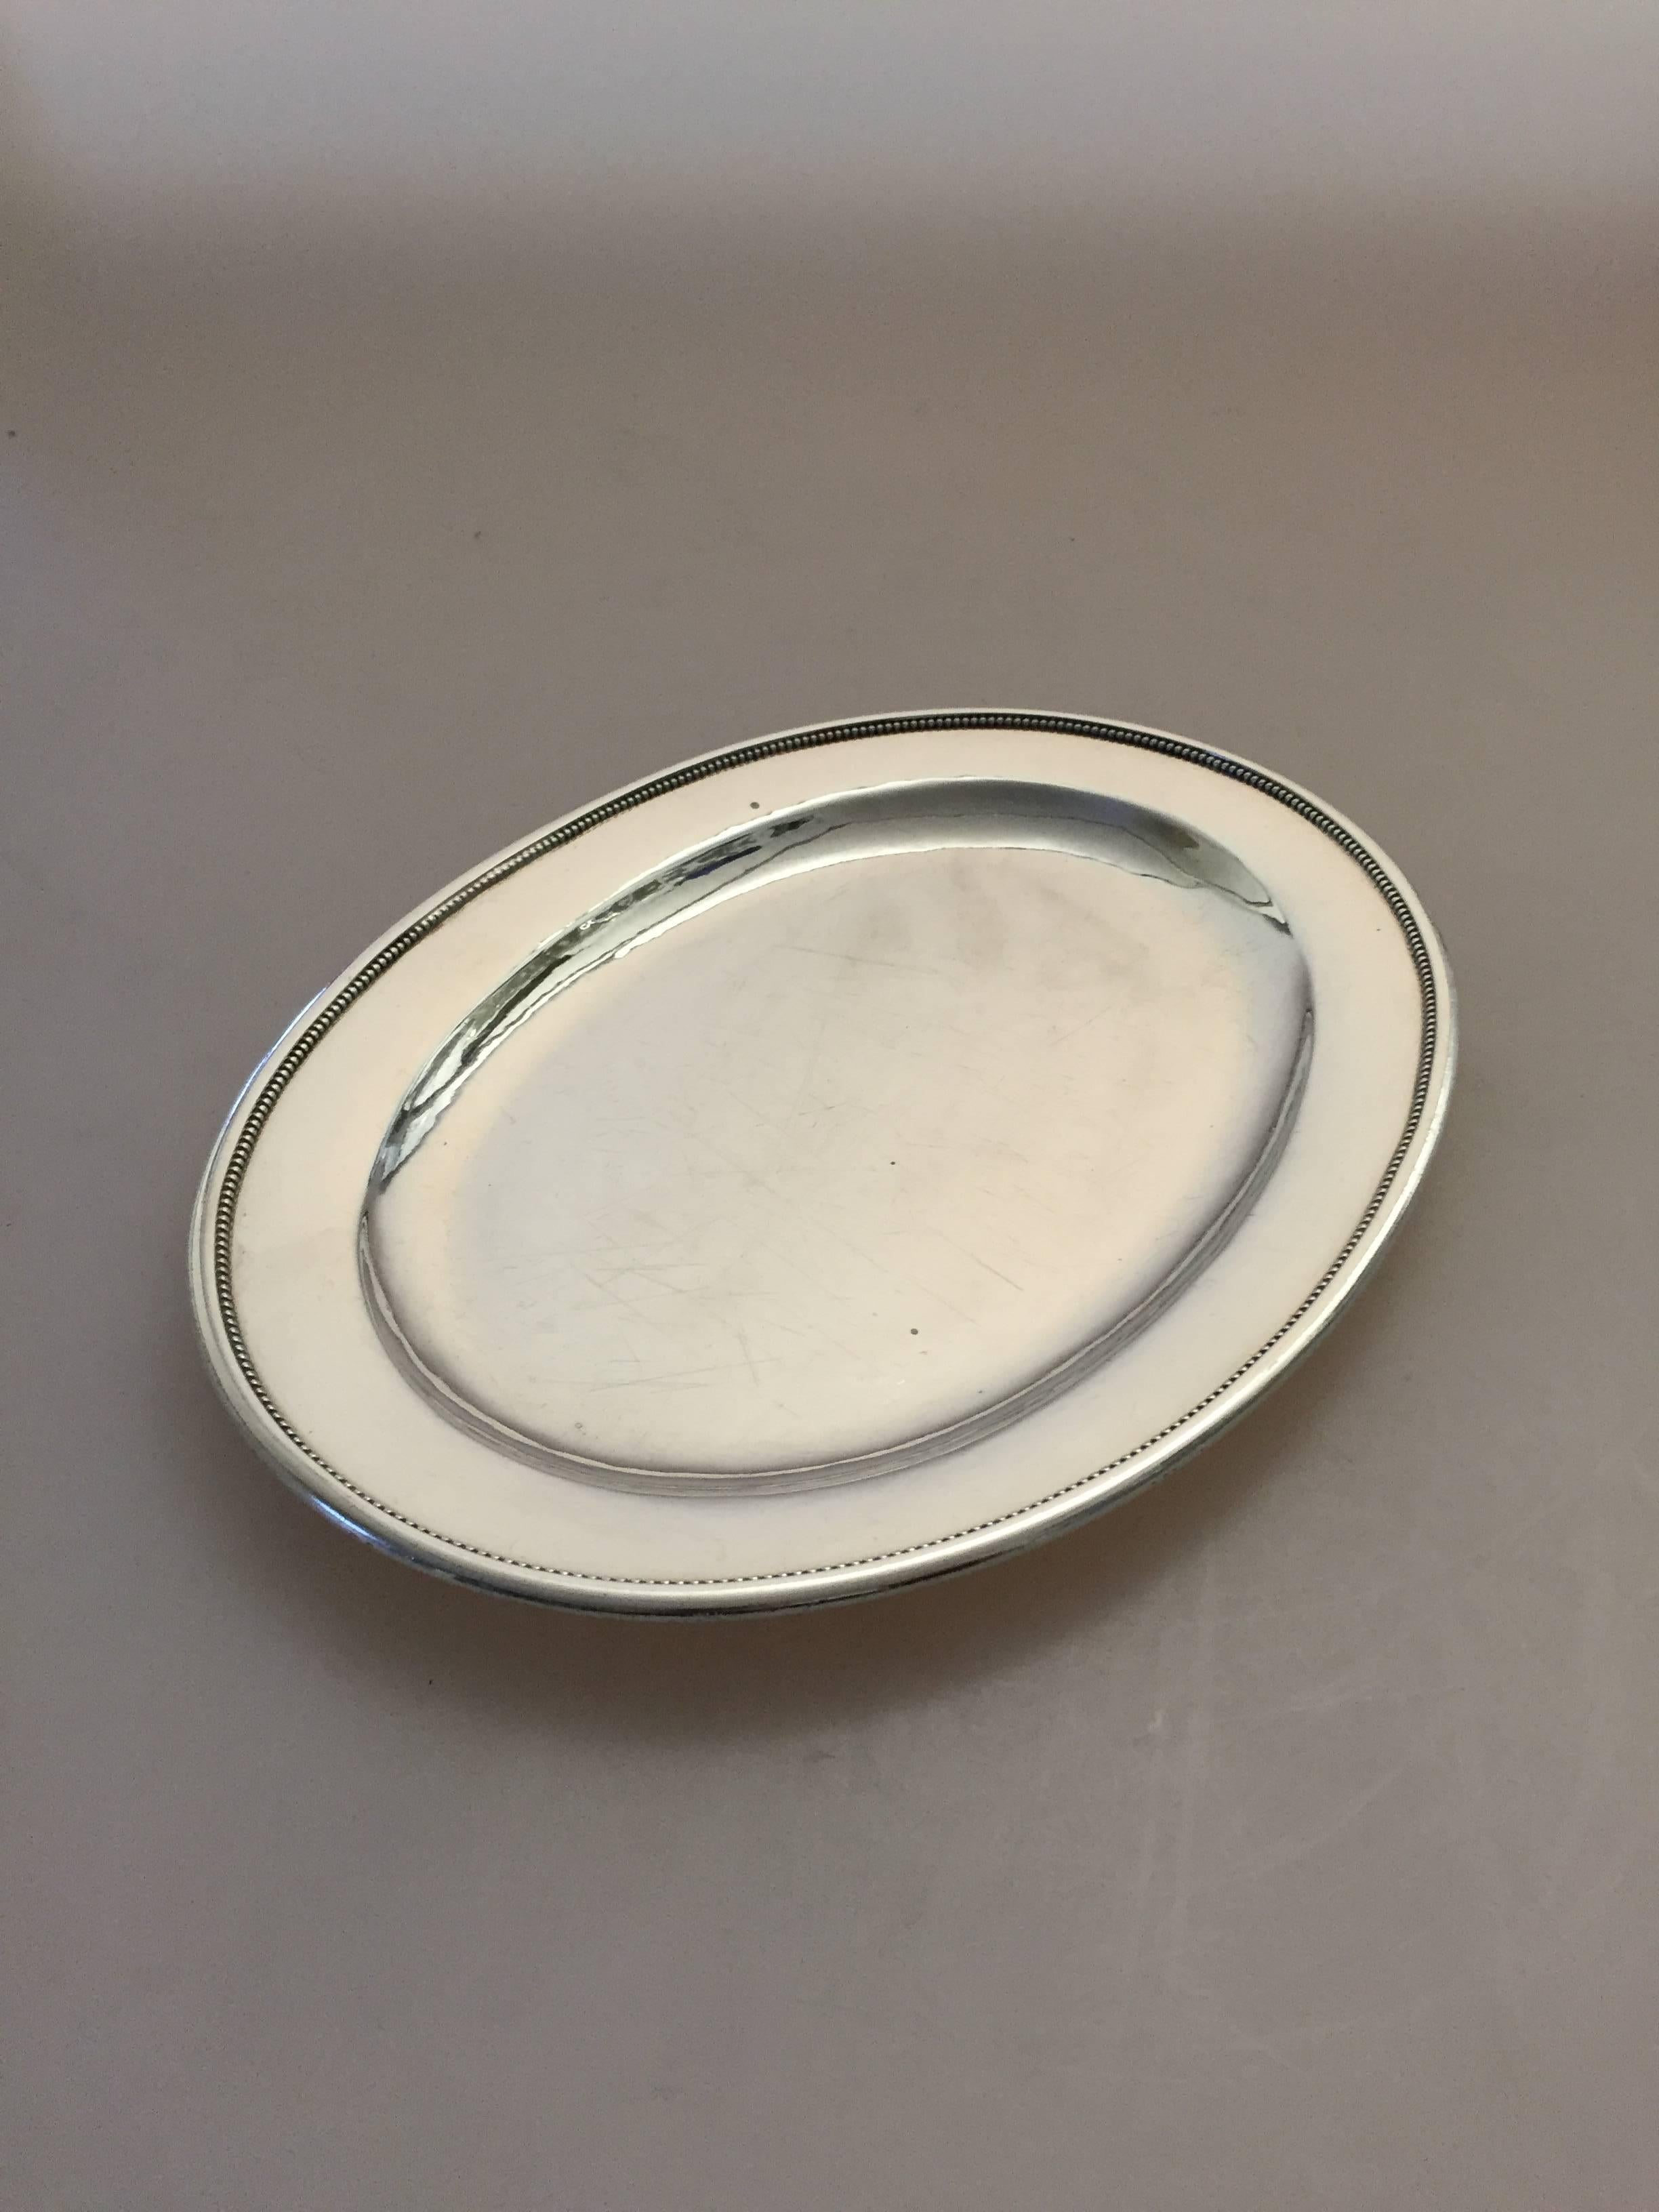 Georg Jensen sterling silver serving tray #210D.

Measures: 29.5 cm x 20 cm.